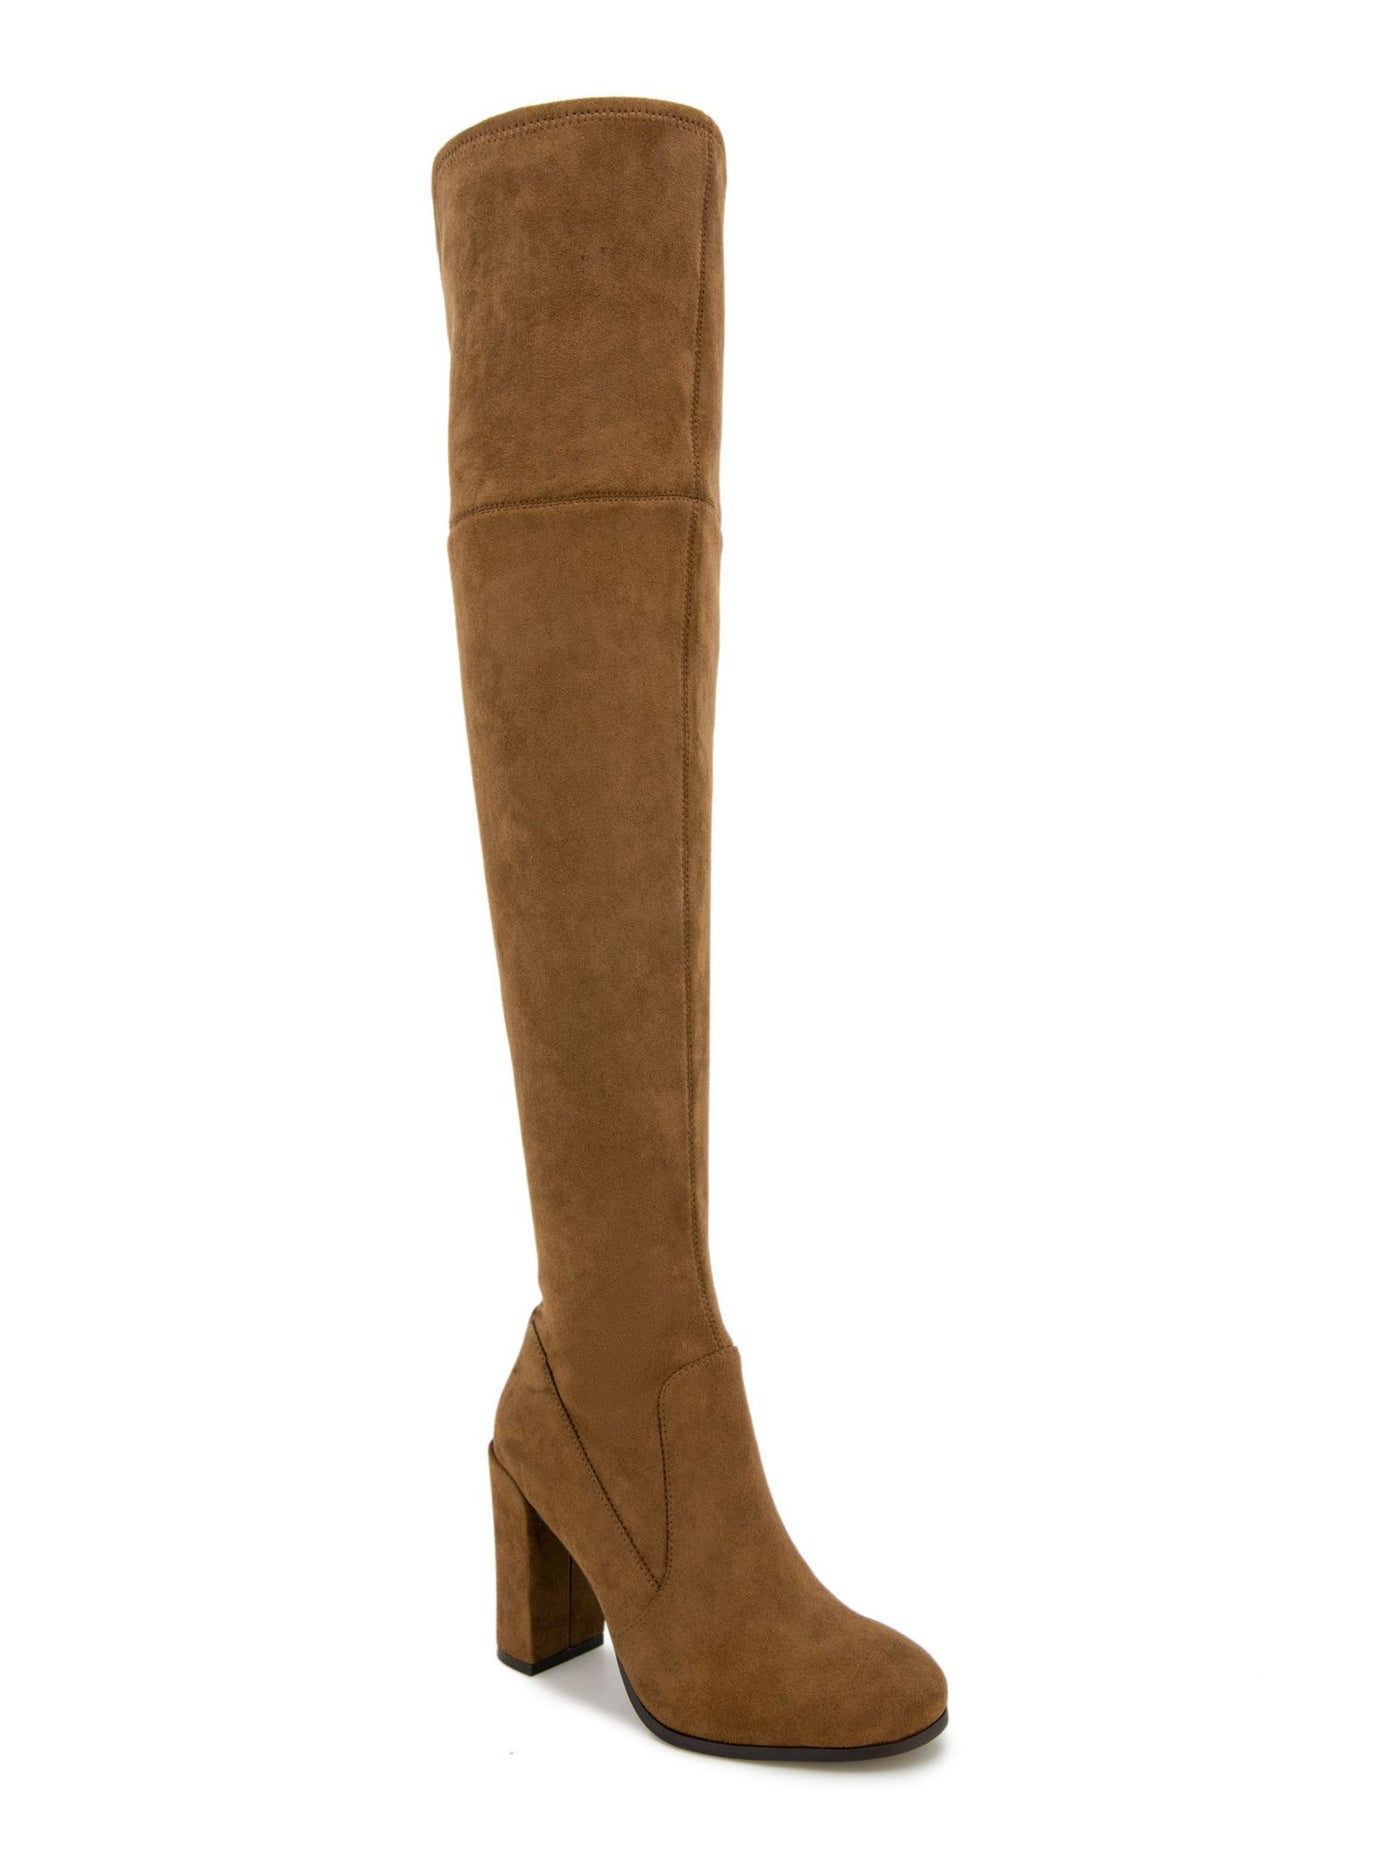 KENNETH COLE NEW YORK Womens Brown Inside Half Zip Justin Round Toe Block Heel Dress Boots 11 M